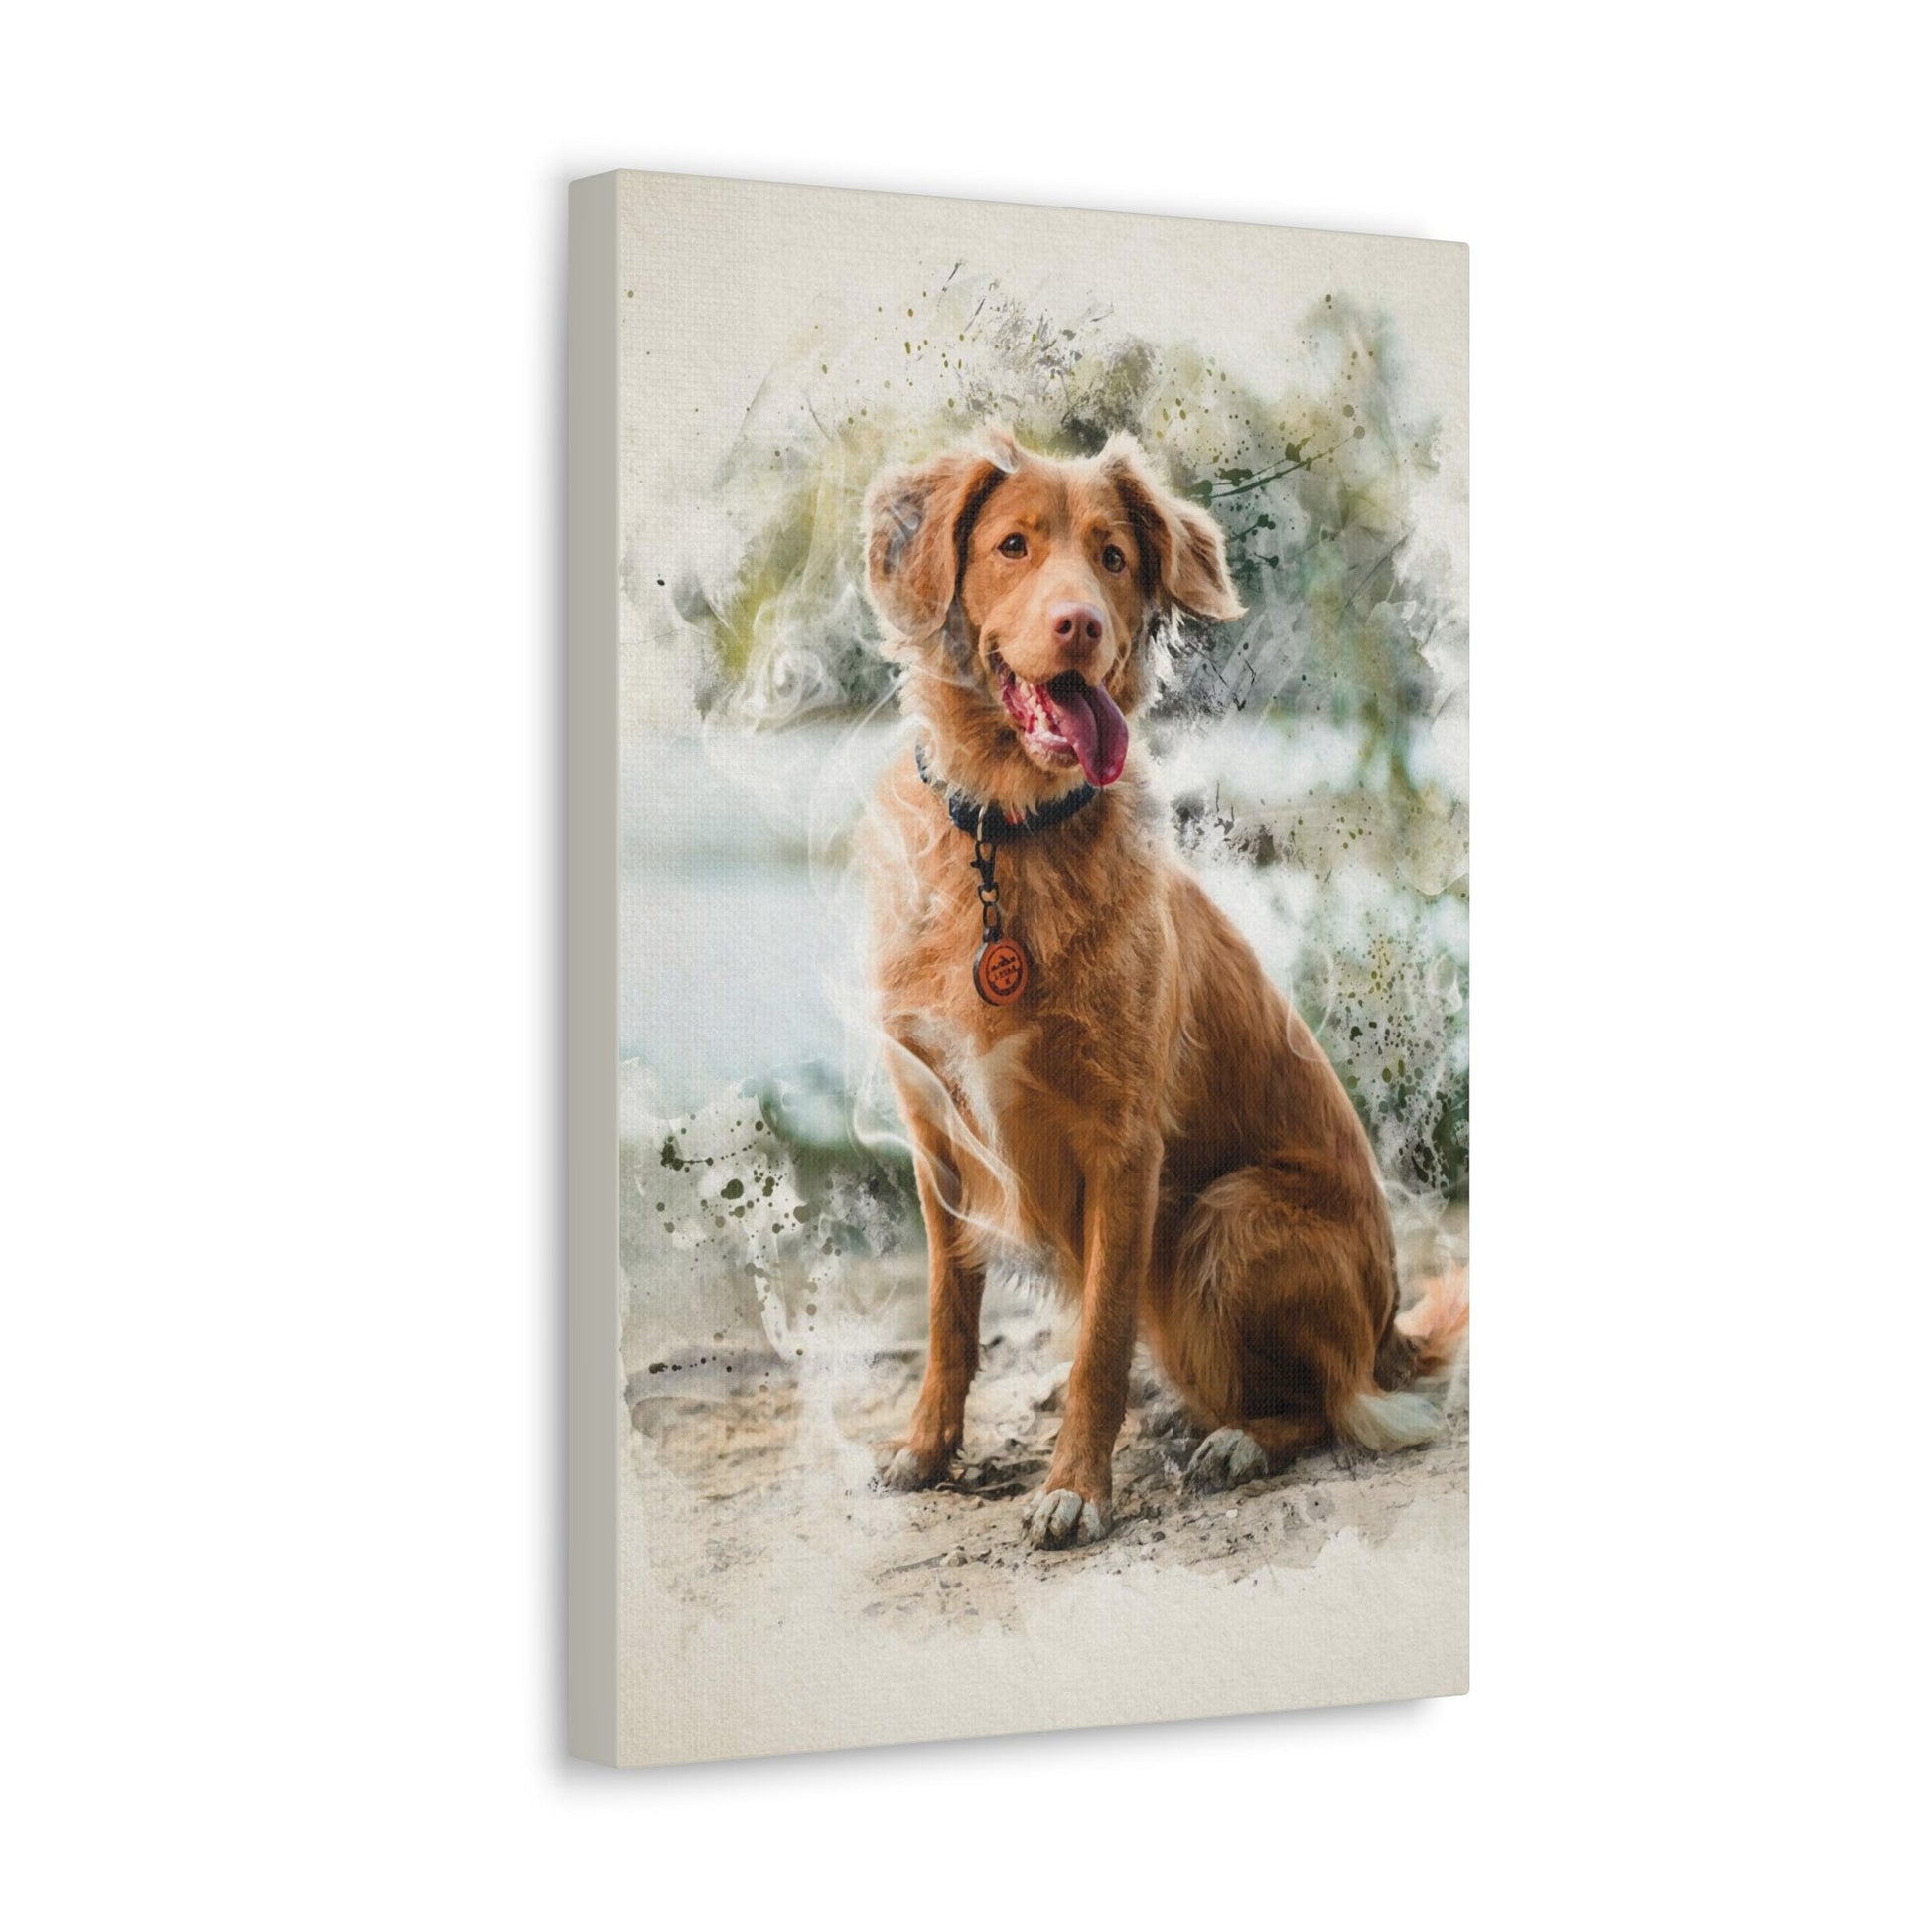 Vibrant custom pet portrait on stretched canvas, a personalized masterpiece-dog portrait